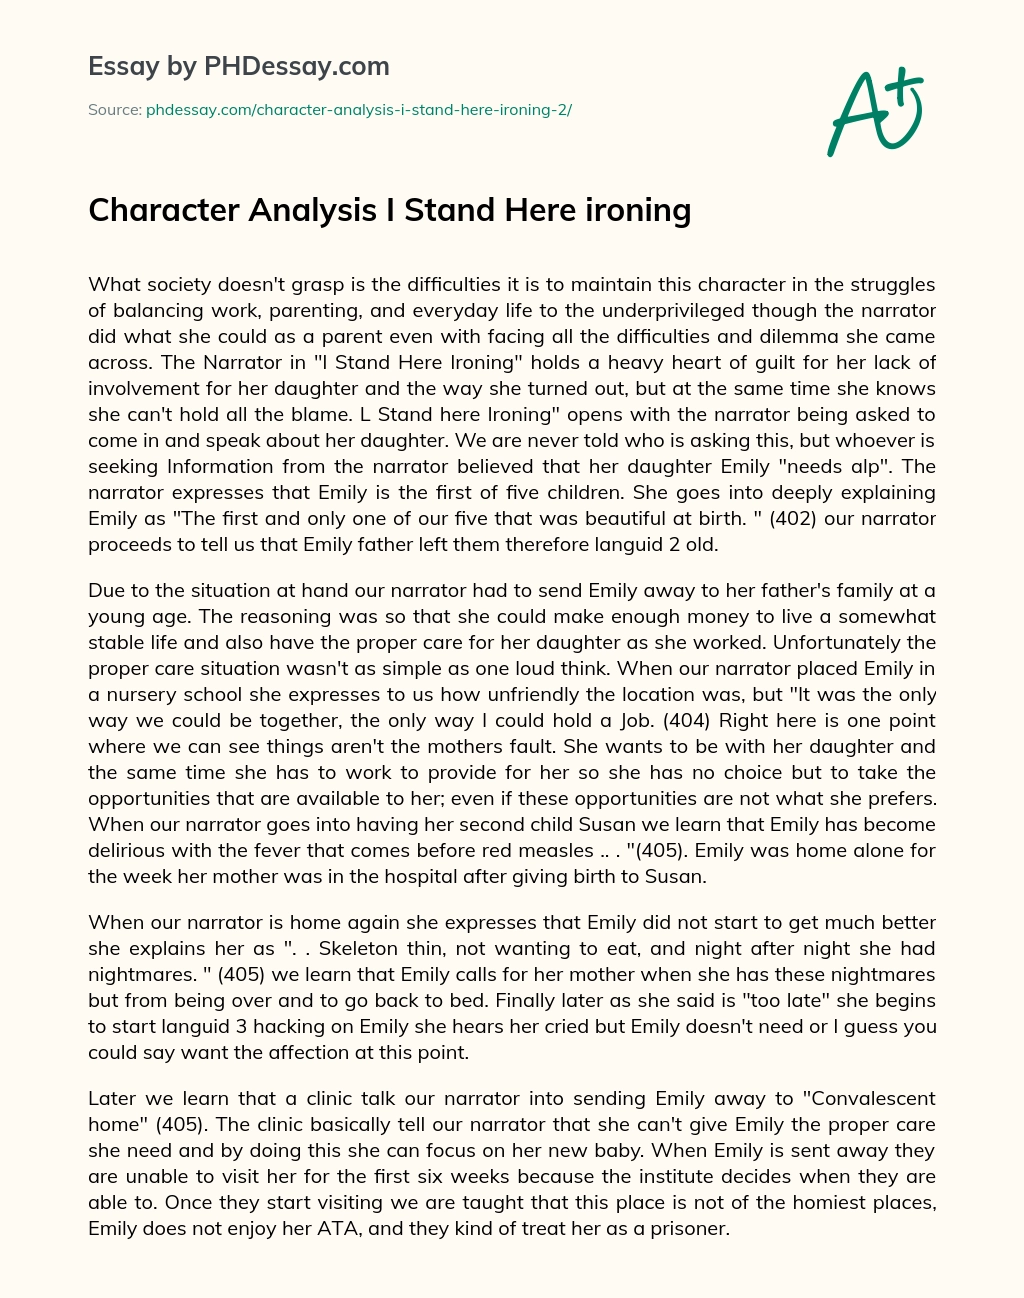 Character Analysis I Stand Here ironing essay